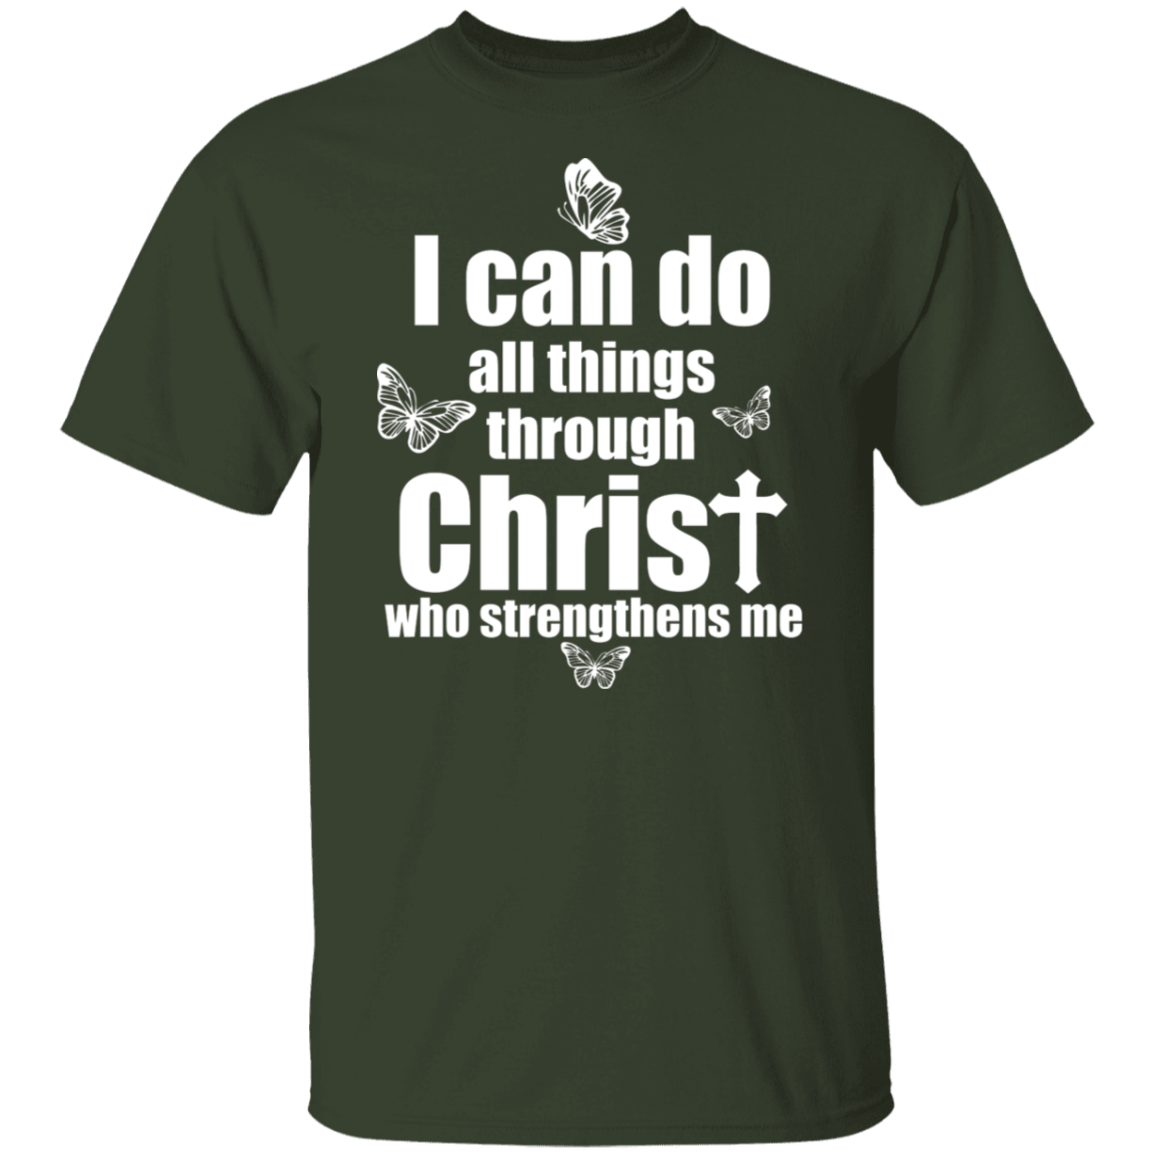 Best Bible Verses Shirts Online | All Things Through Christ Shirt ...